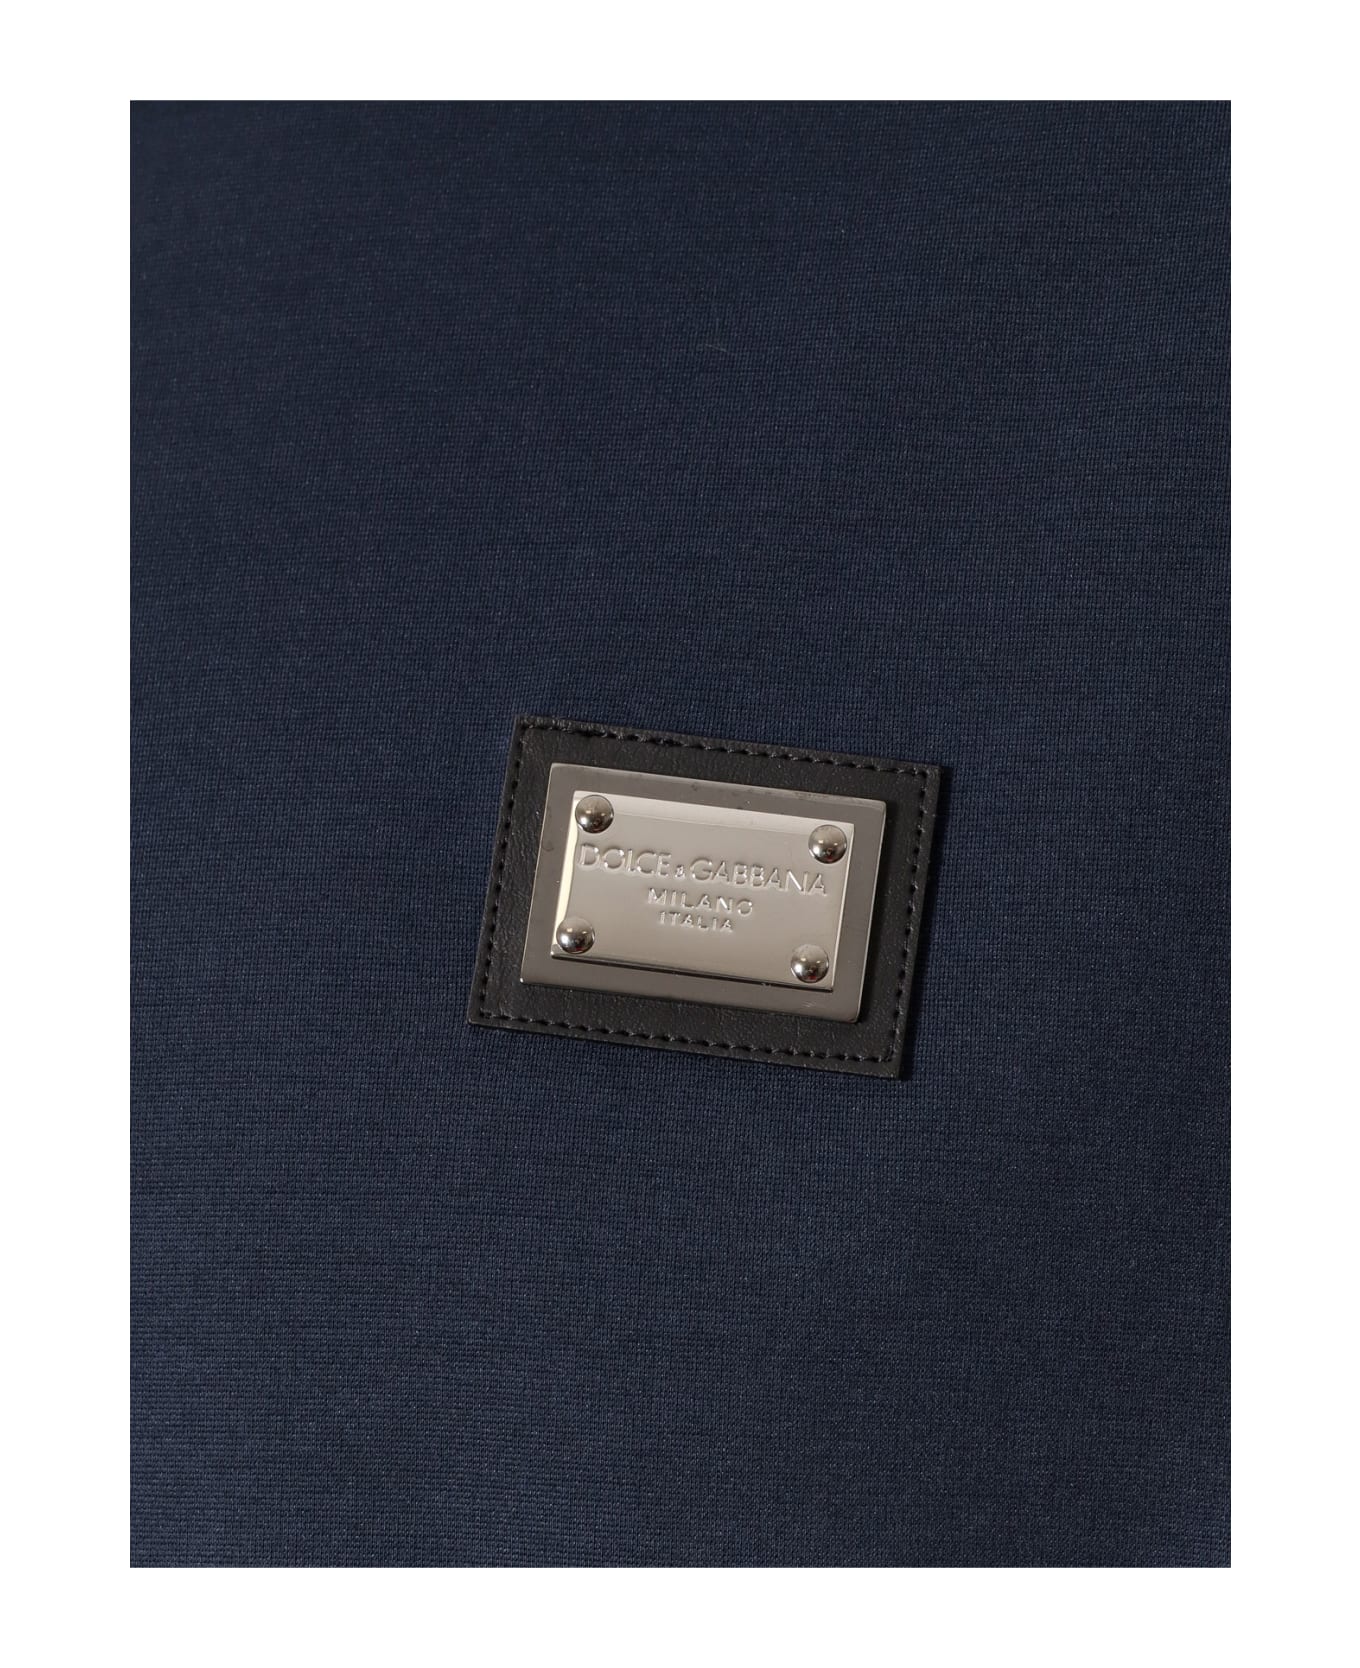 Dolce & Gabbana Sleeveless Jacket With Hood - Blue ベスト